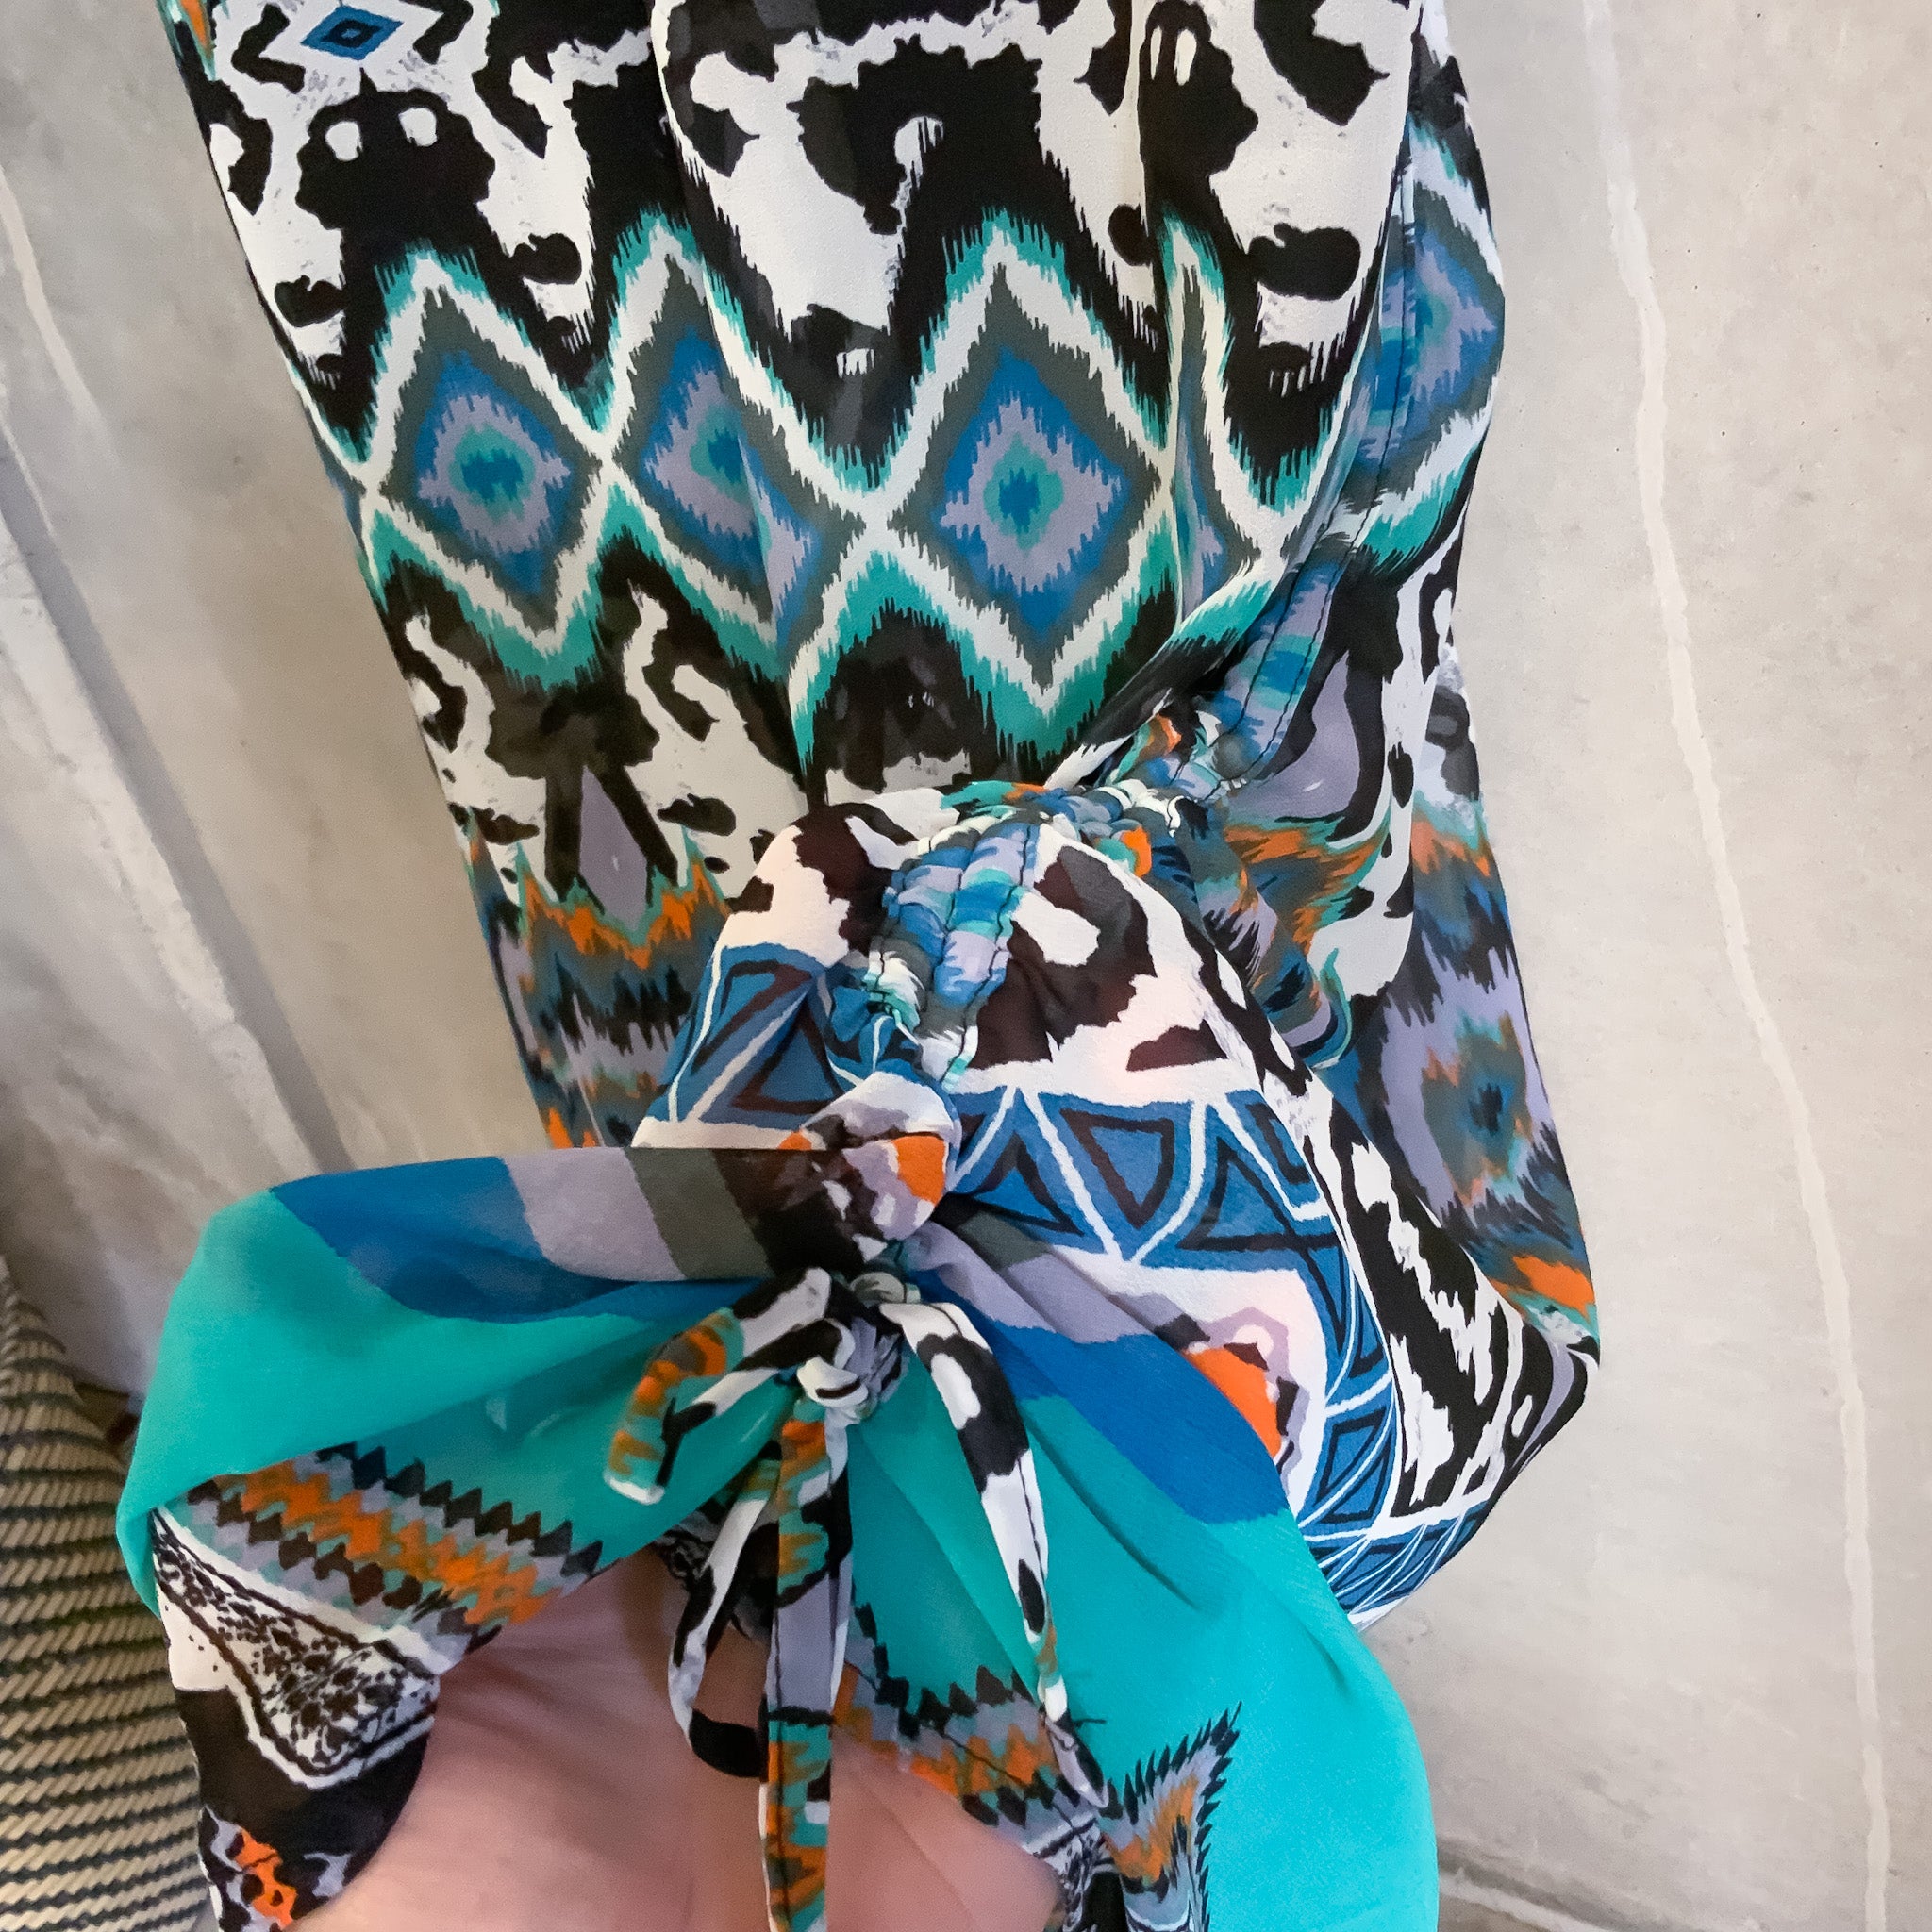 BNWT CHASING KATE Black Corset Top Blue Aztec Print Corset Maxi Dress - Size 14